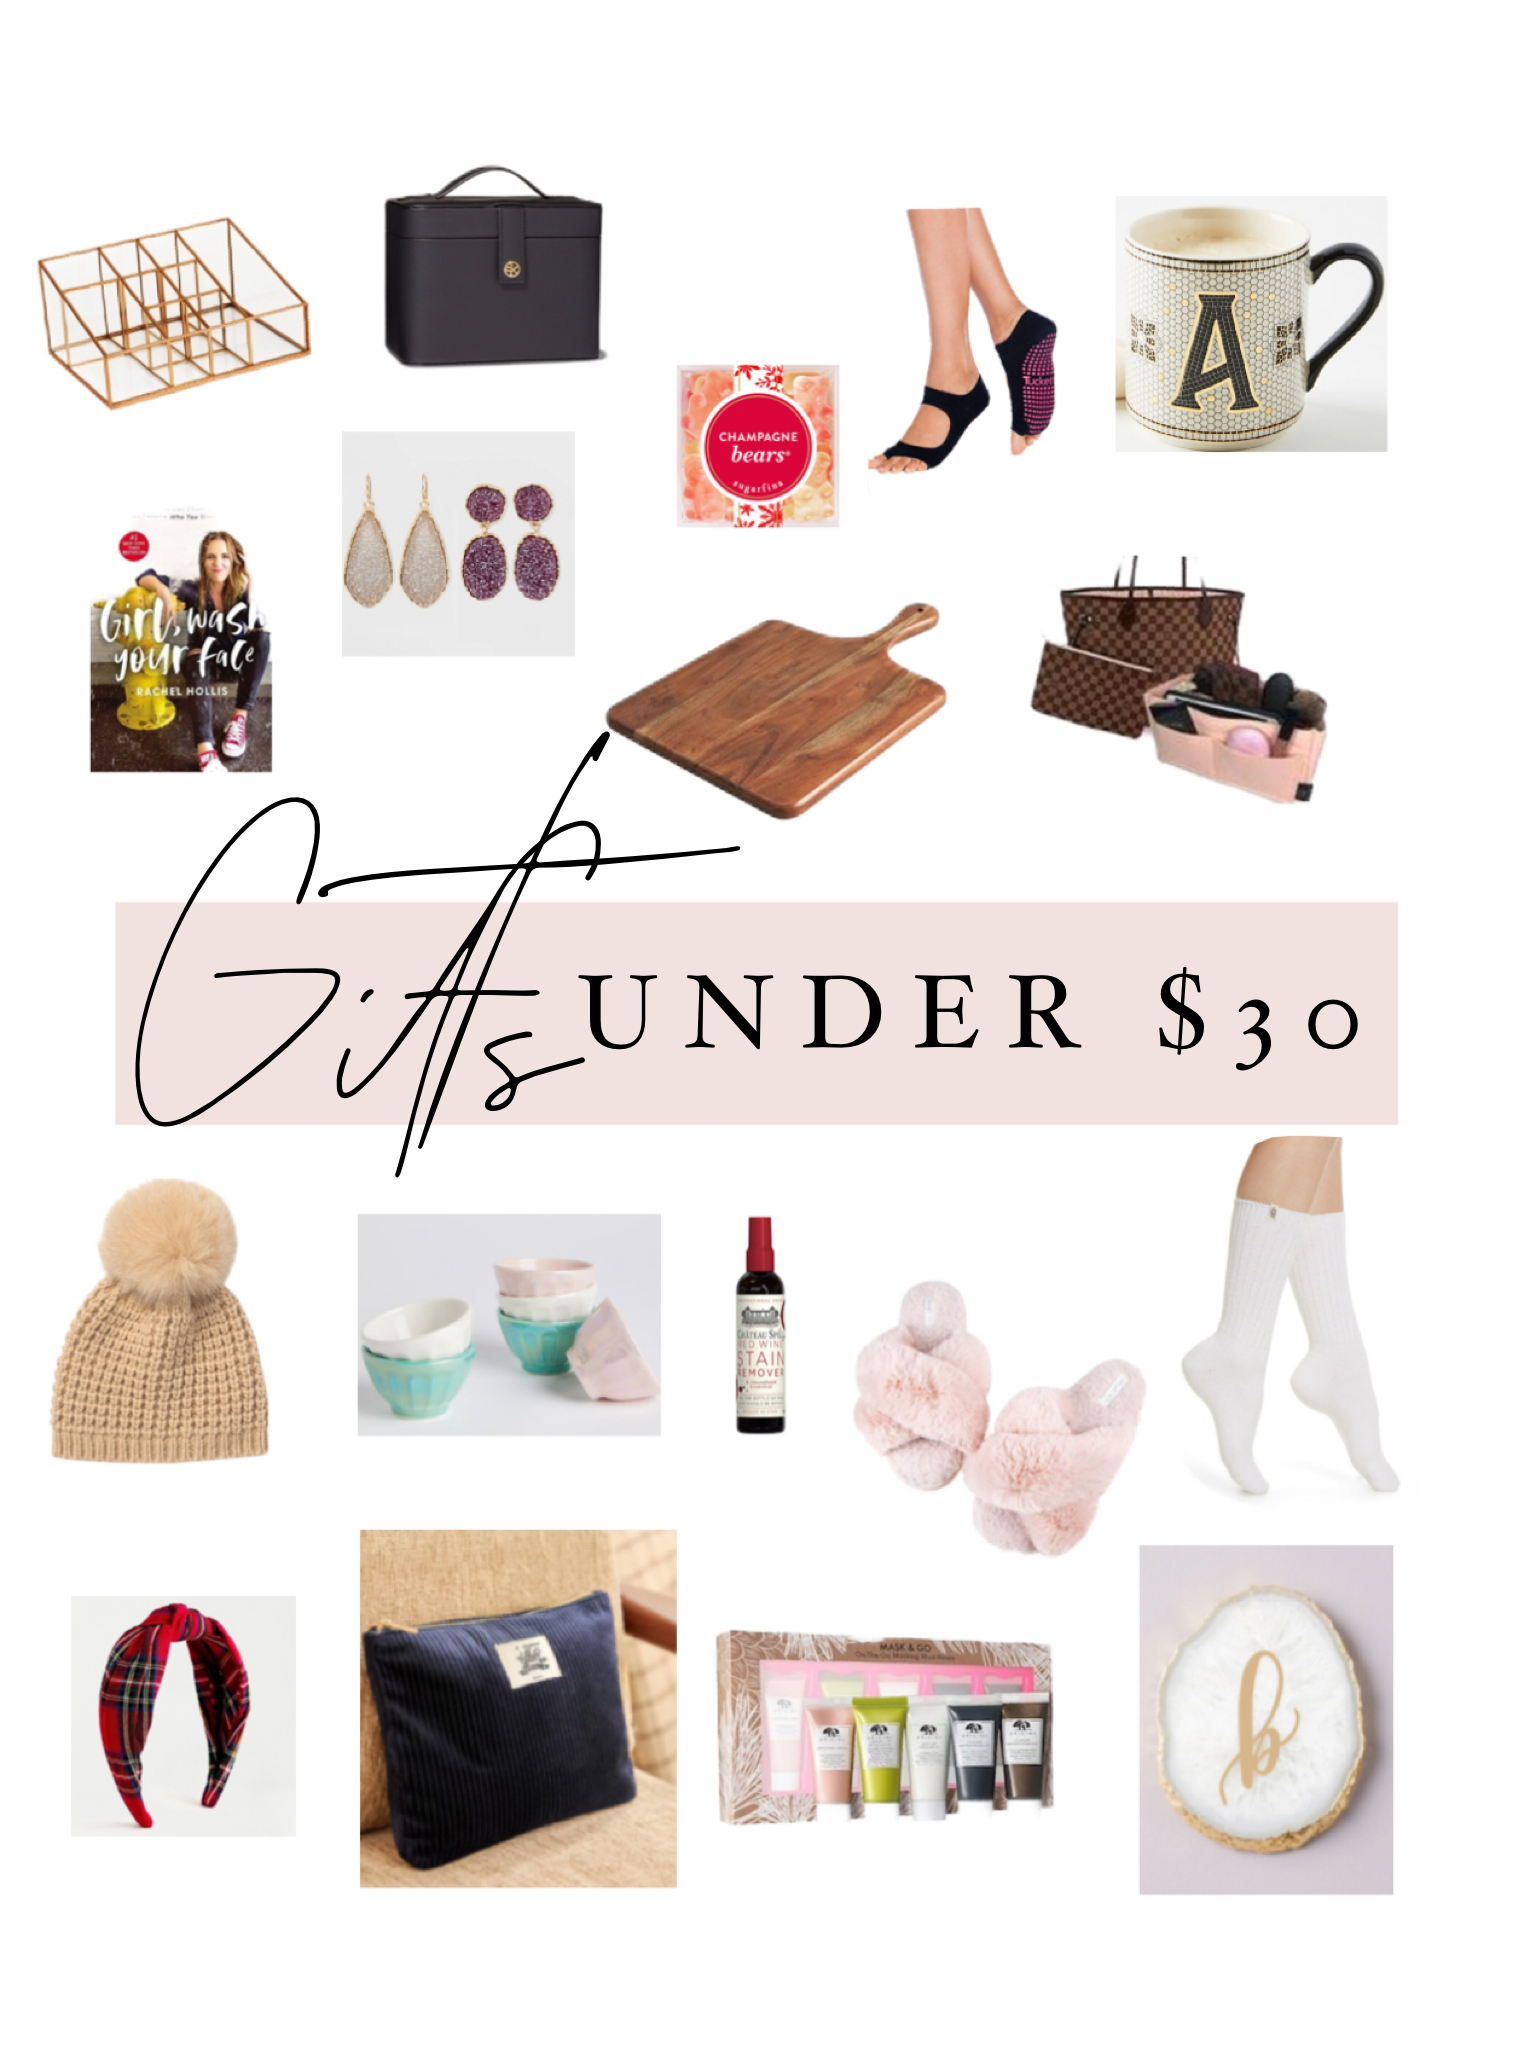 Gifts under $30, stocking stuffer, stylist stocking stuffer, white elephant gifts, secret Santa gifts